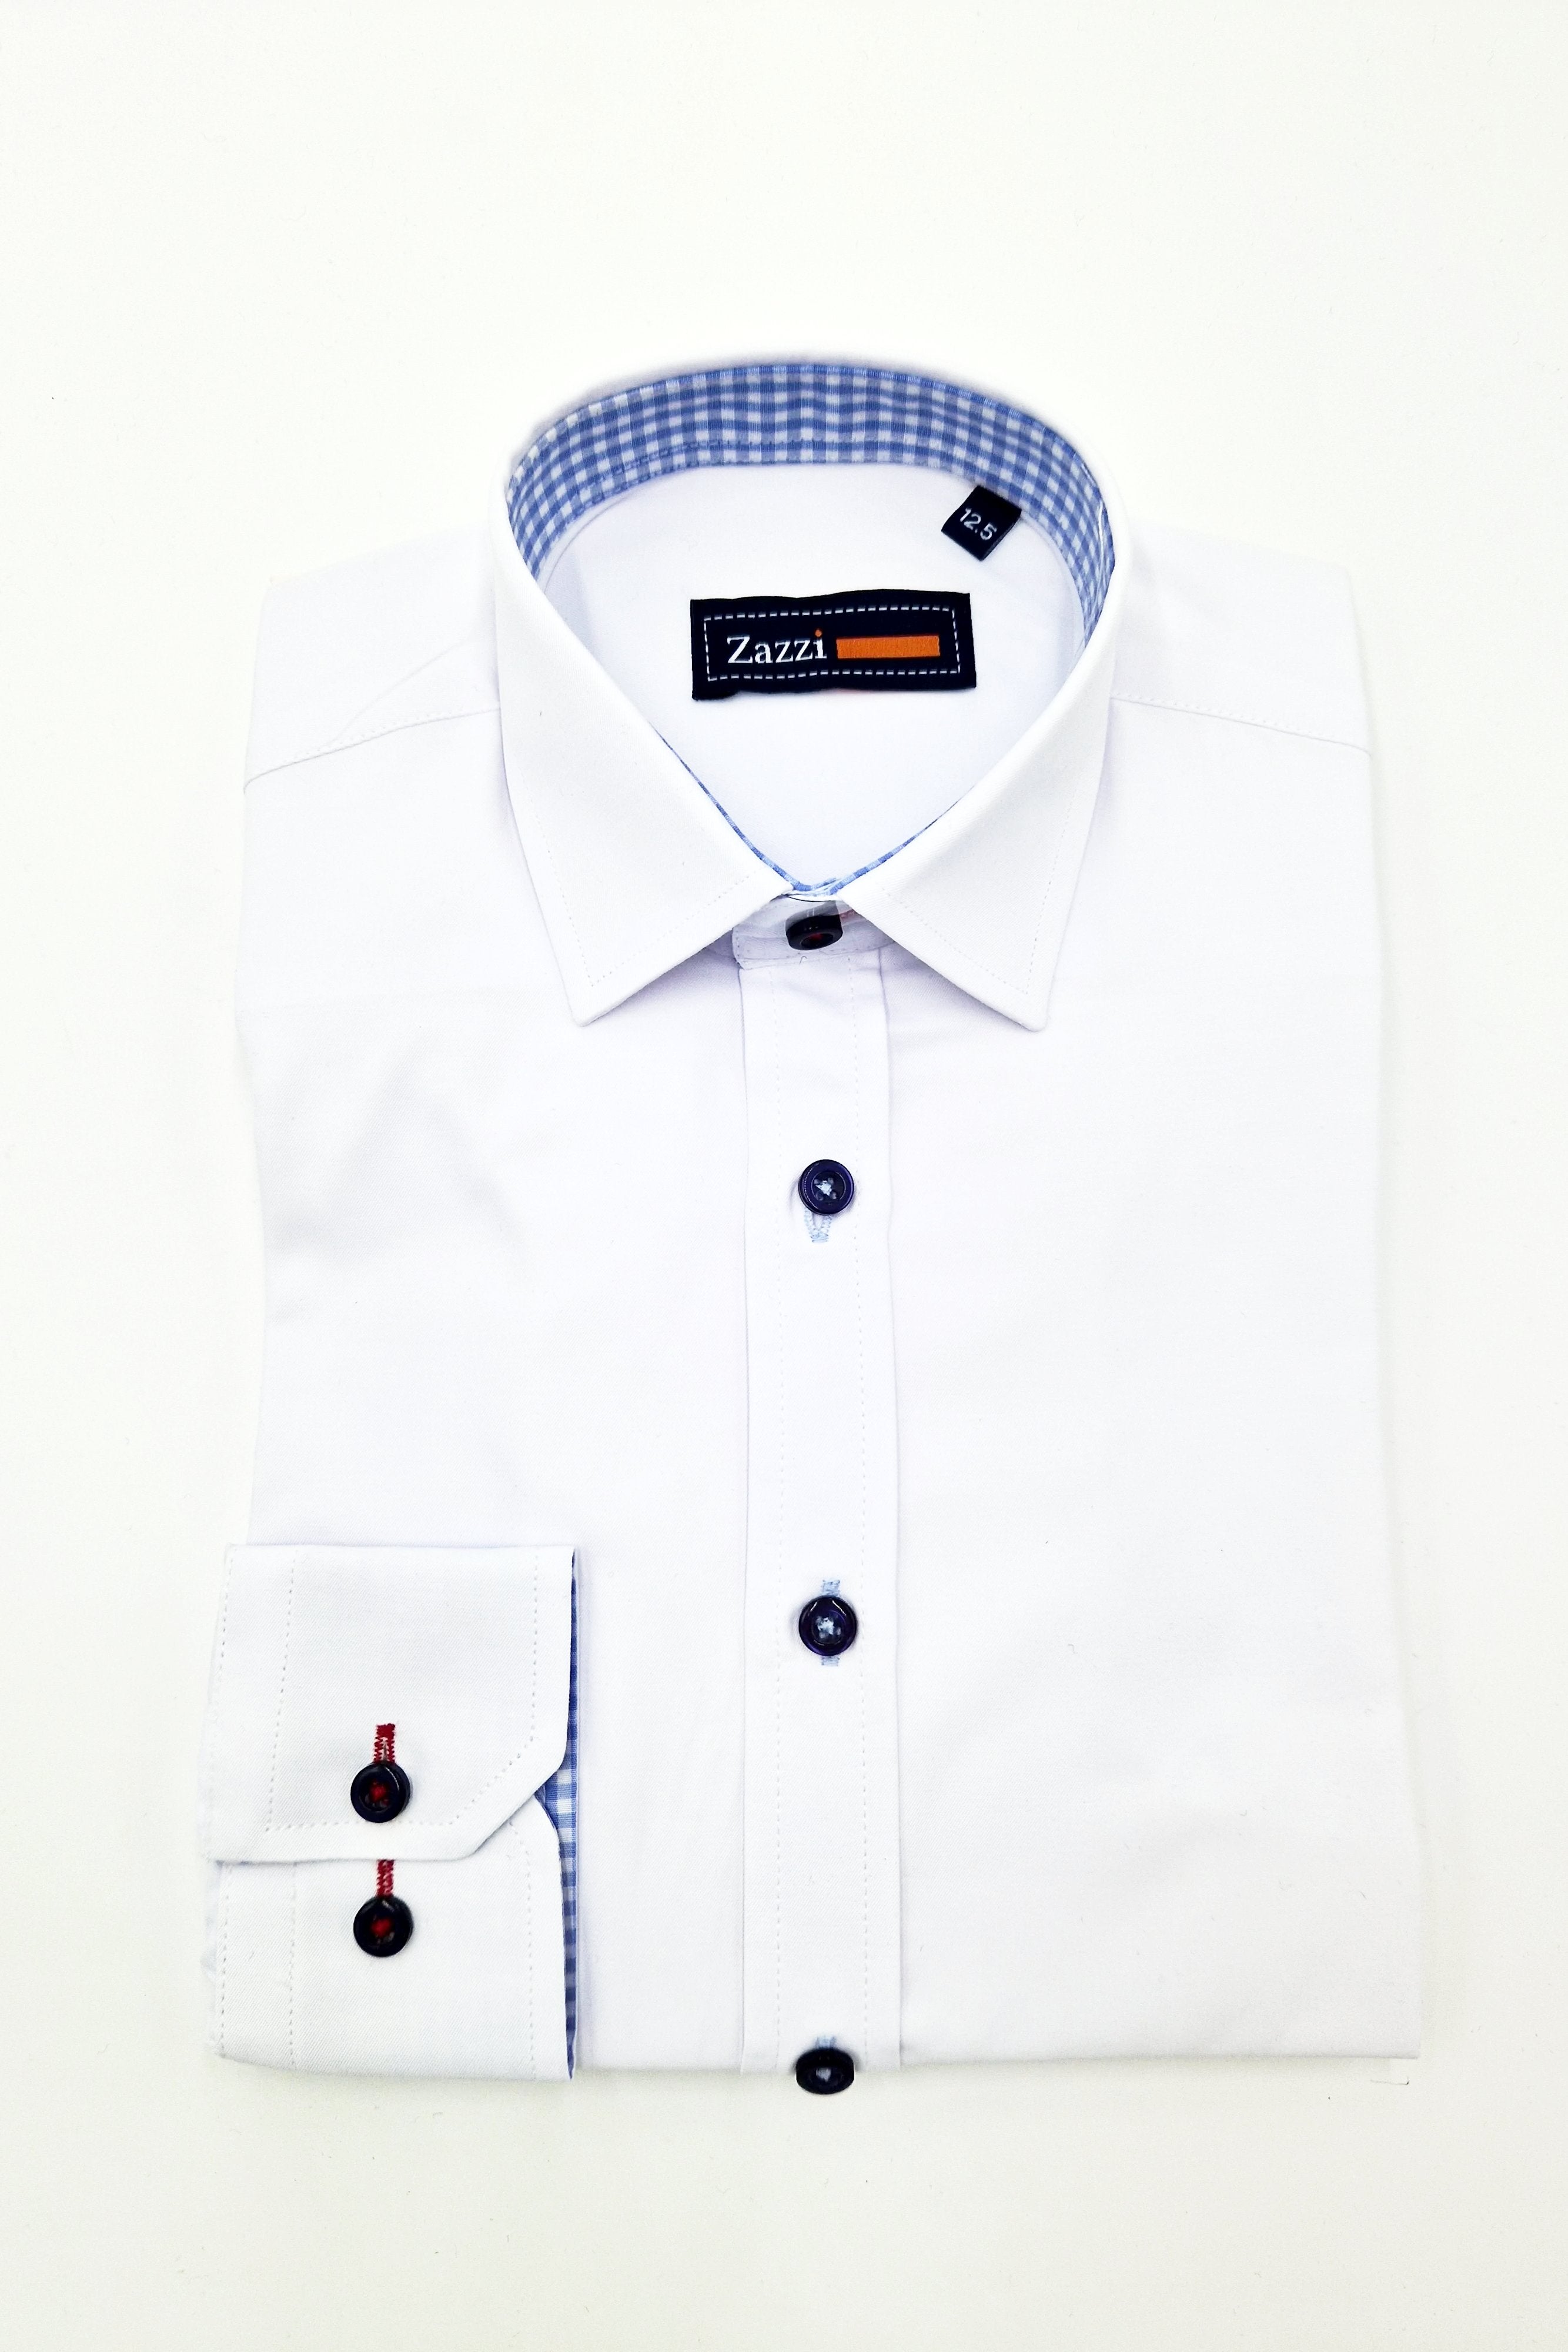 Zazzi Boys White Shirt - Communion/ Wedding Boy Shirt